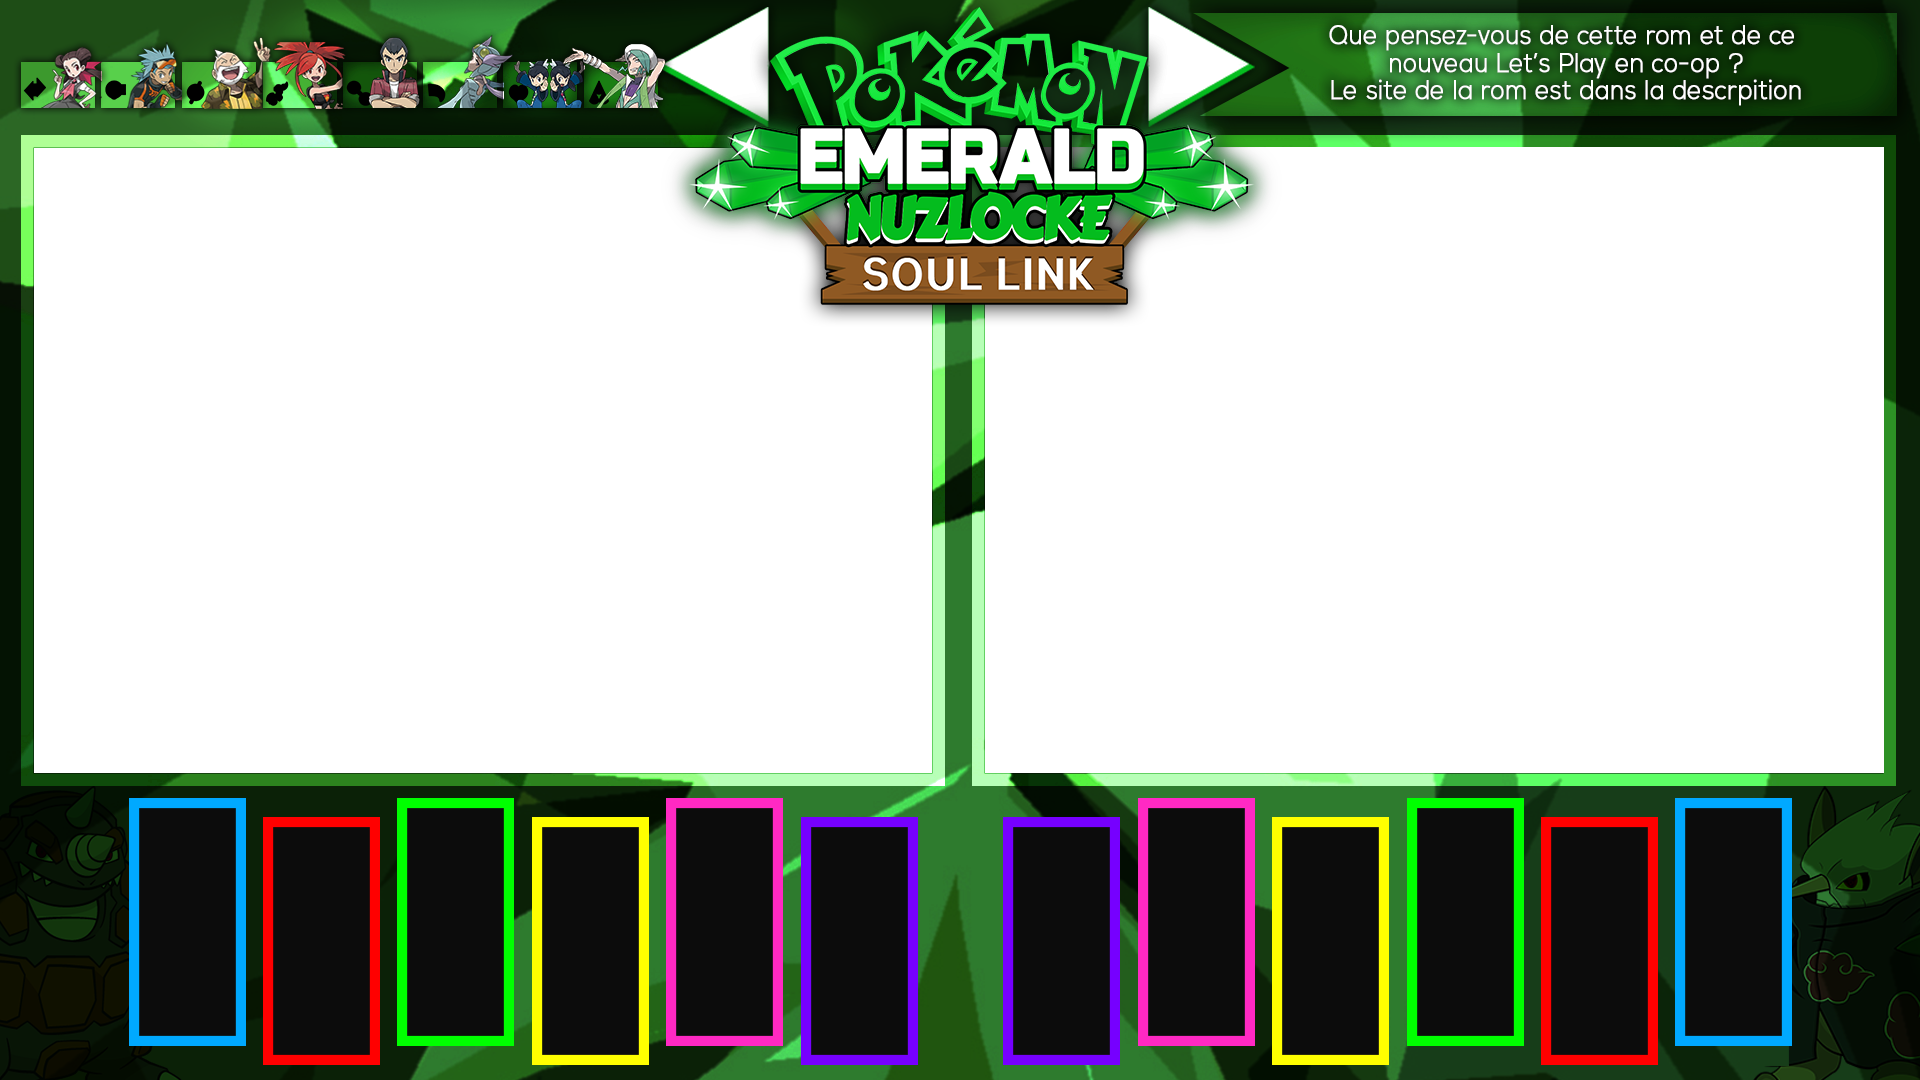 Pokemon Emerald Randomizer 3 Way Soul Link - Demolishing Brawly